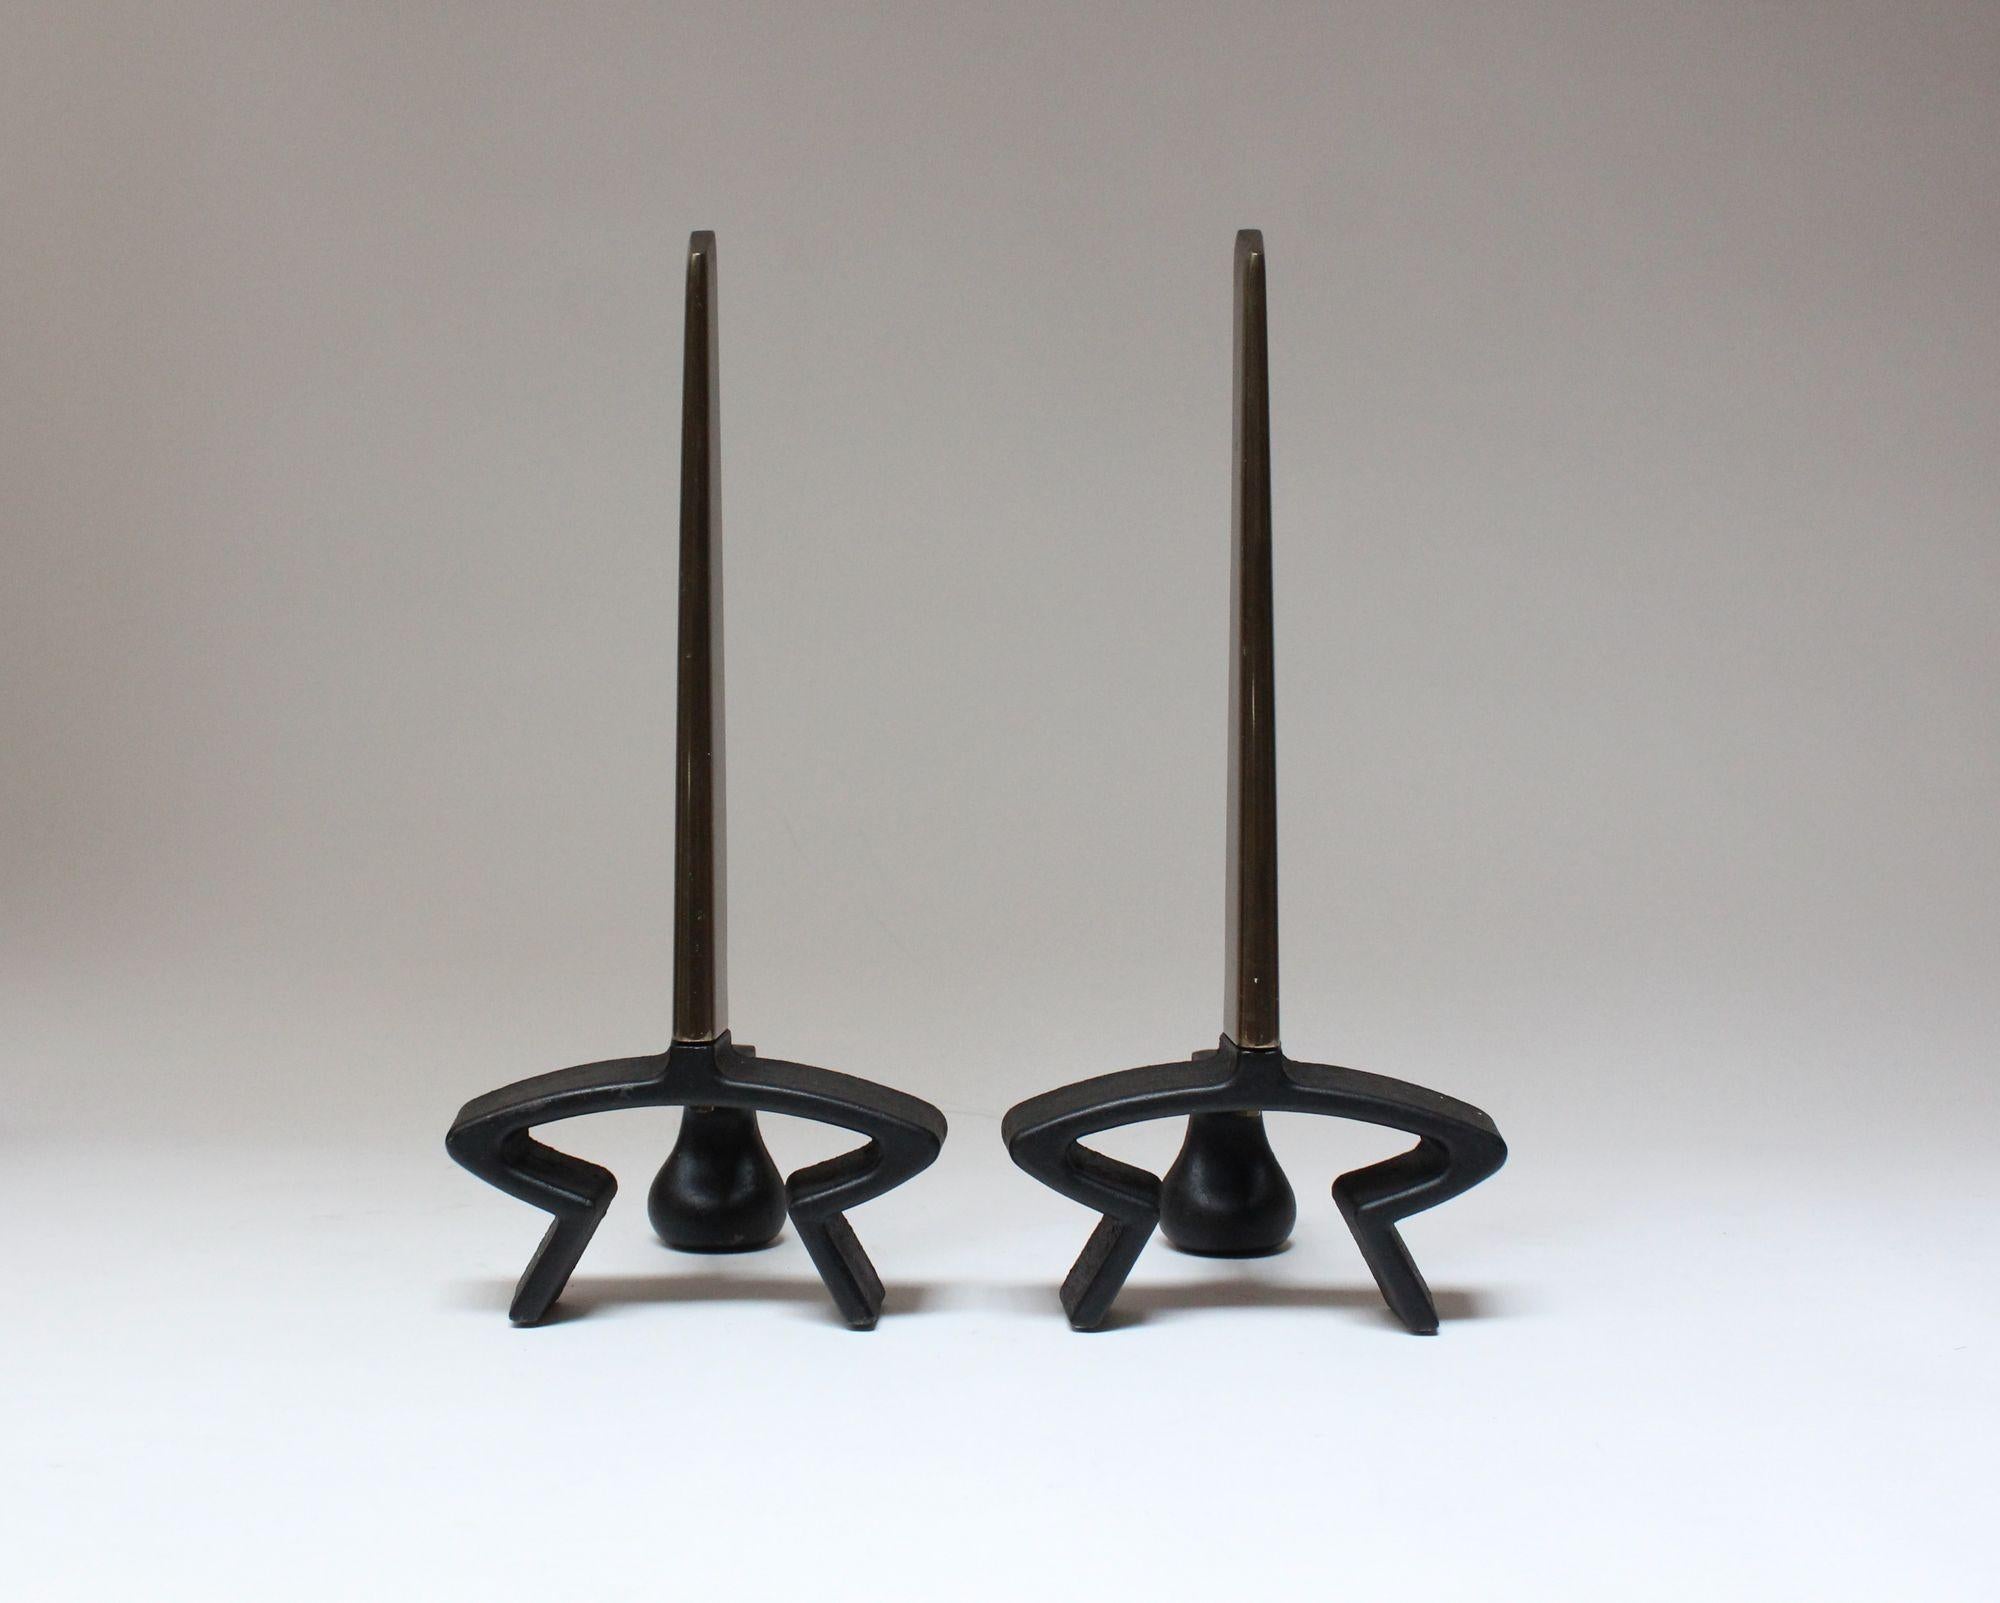 Sculptural blade-form andirons designed by Donald Deskey (ca. 1959, USA).
Inspired by Samuel Gottscho's 1939 